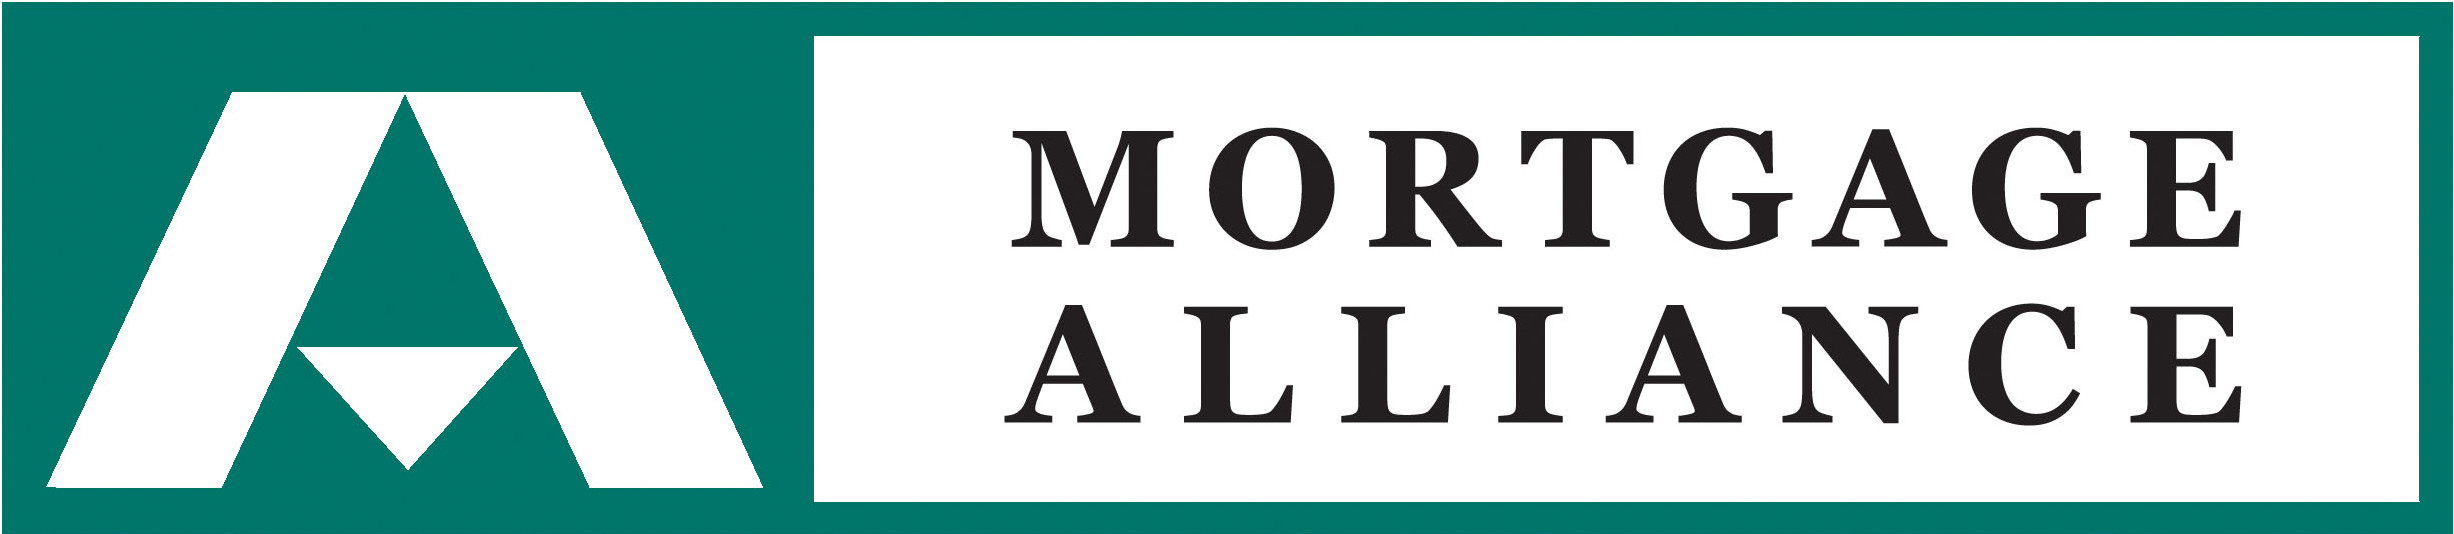 Alliance Mortgage vector logo